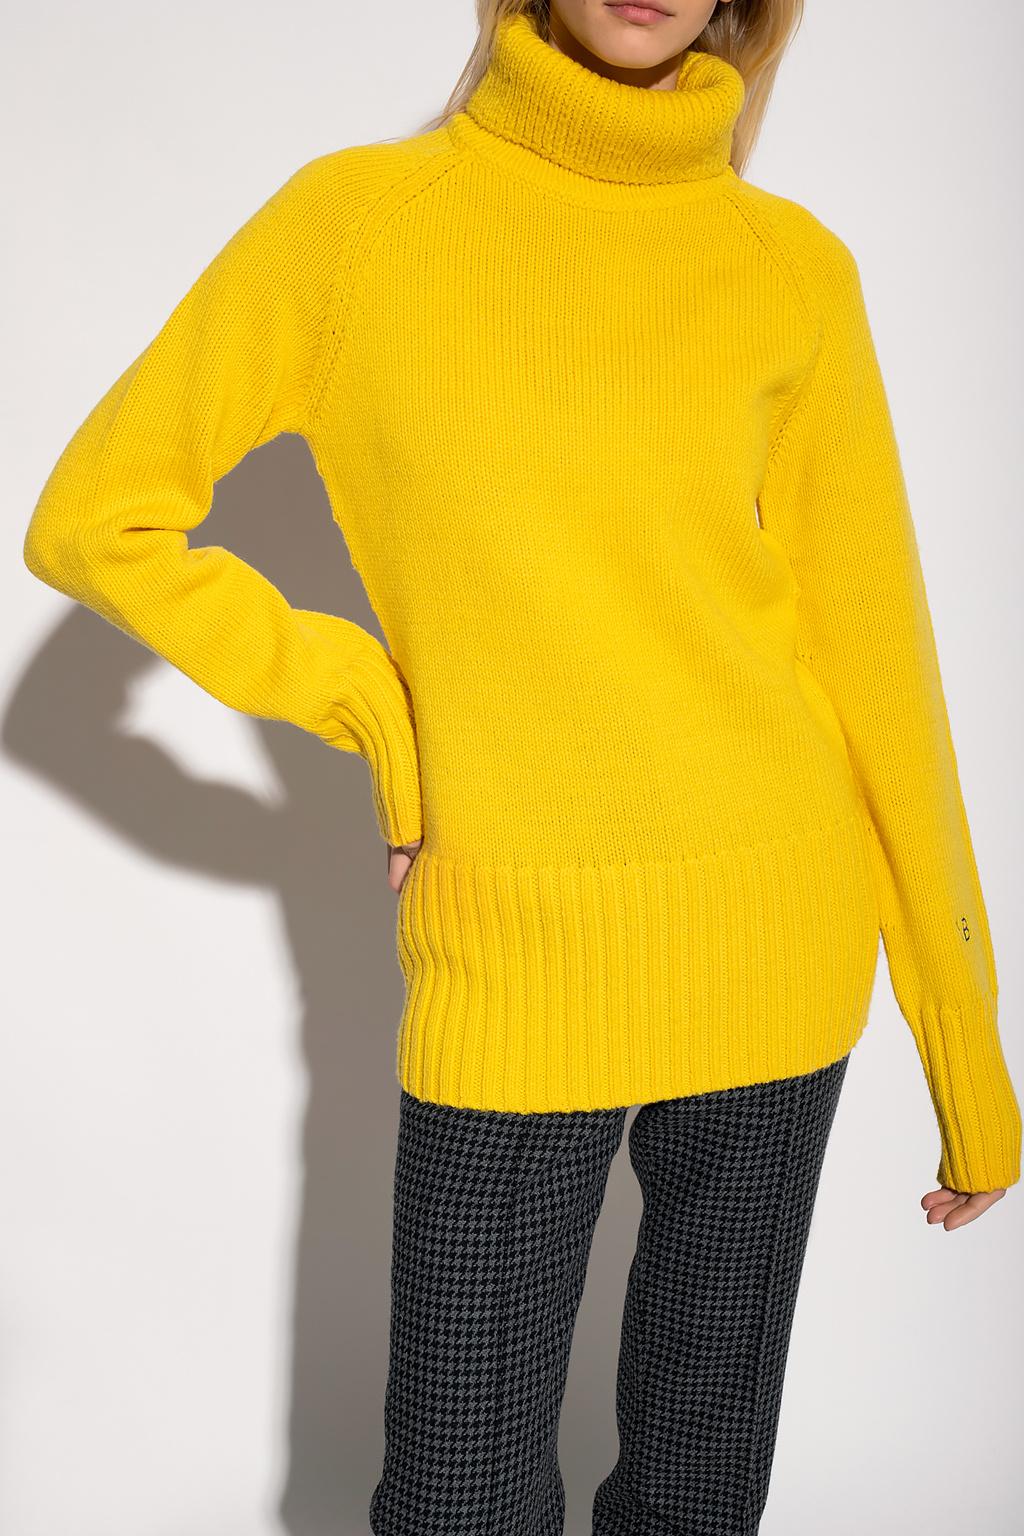 Victoria Beckham Wool Turtleneck Sweater in Yellow | Lyst